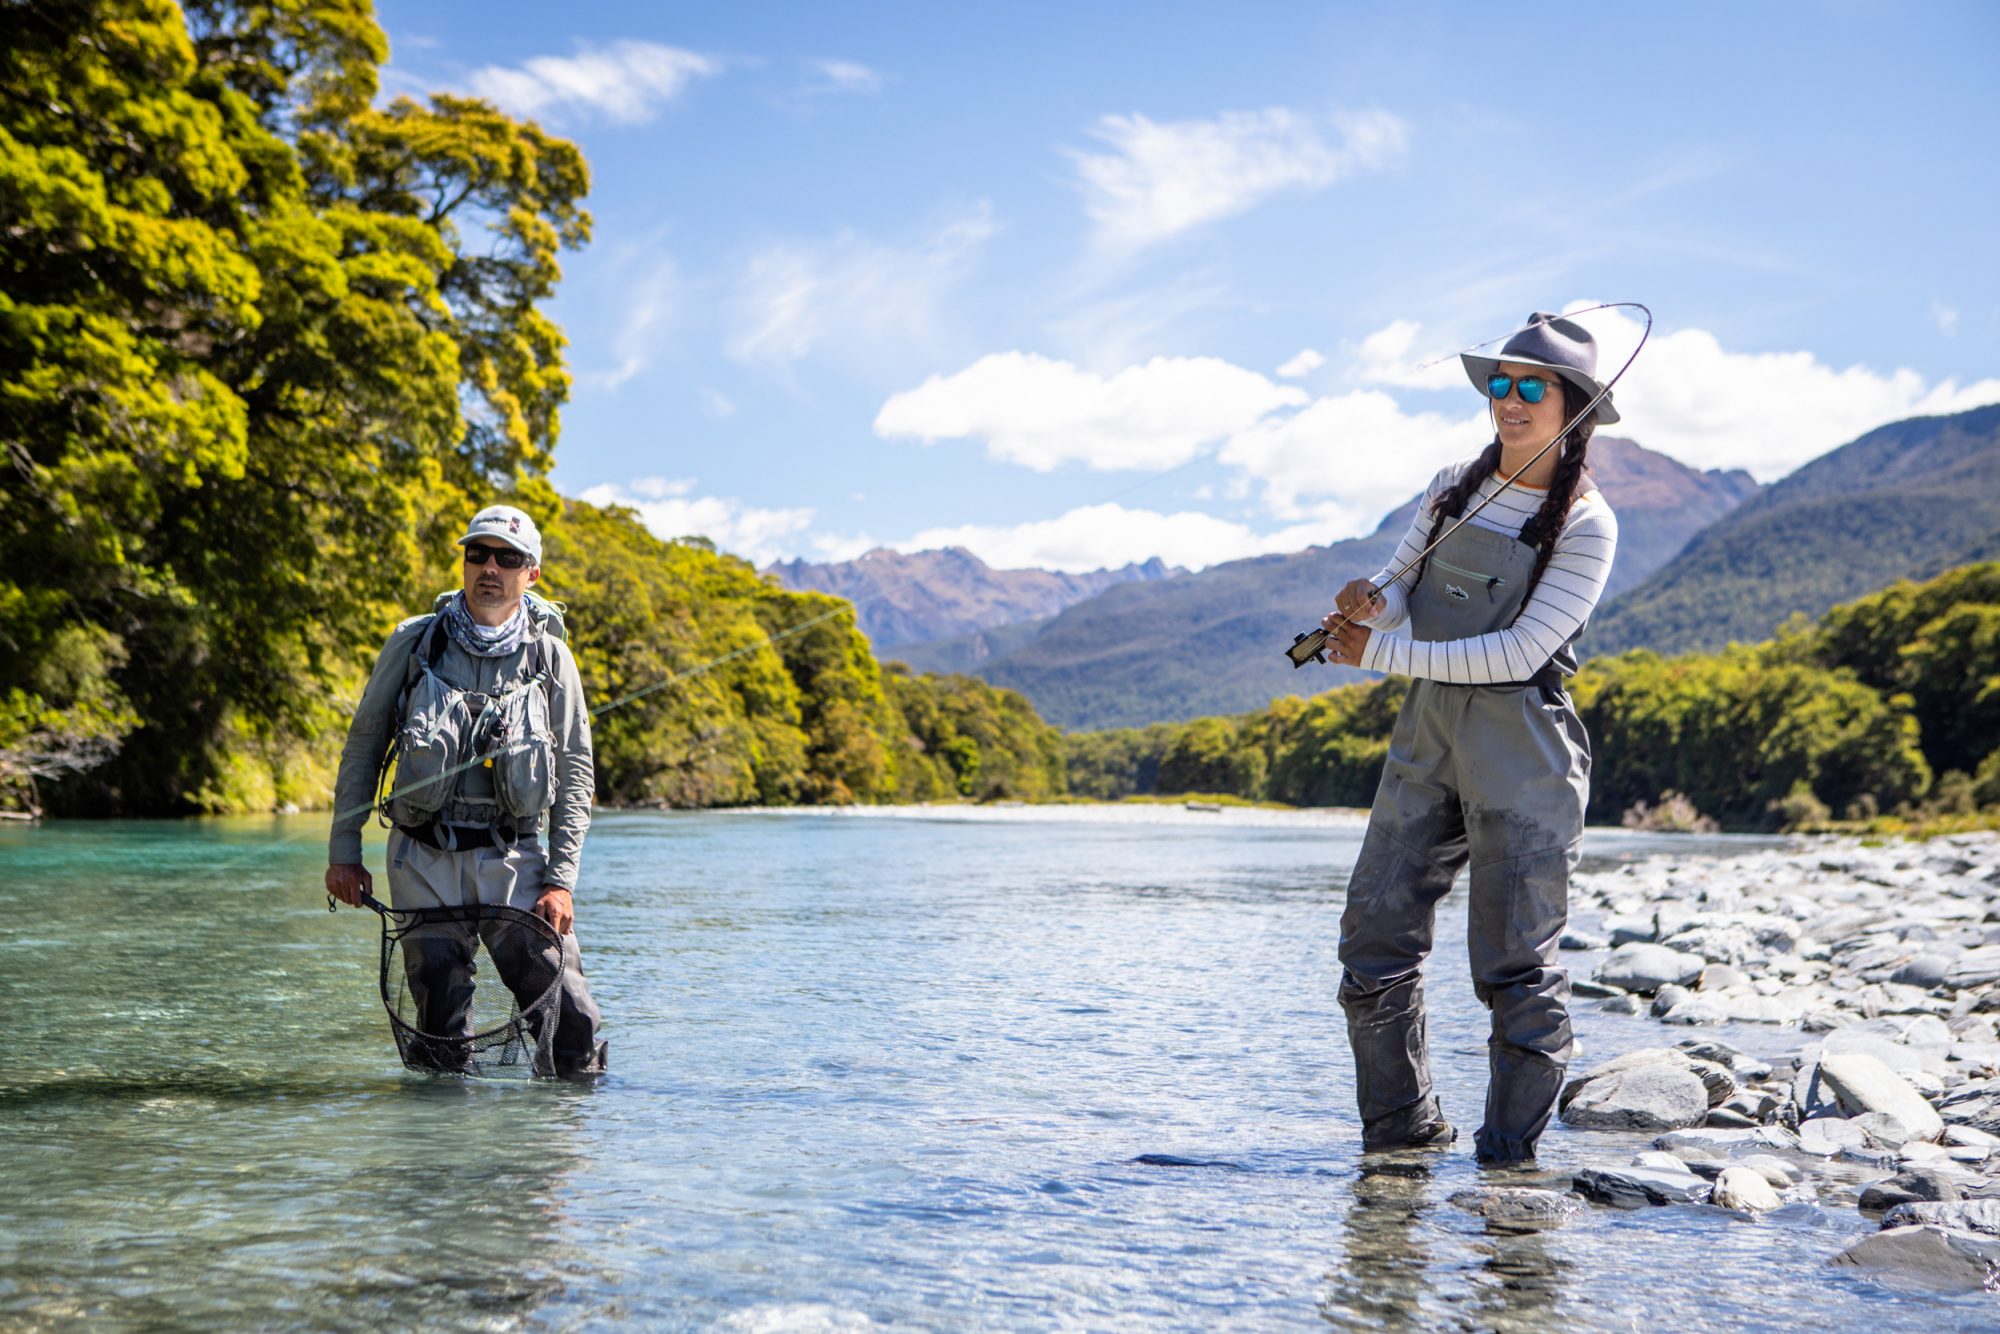 Hunting and Fishing New Zealand, Invercargill - Hi all, Check